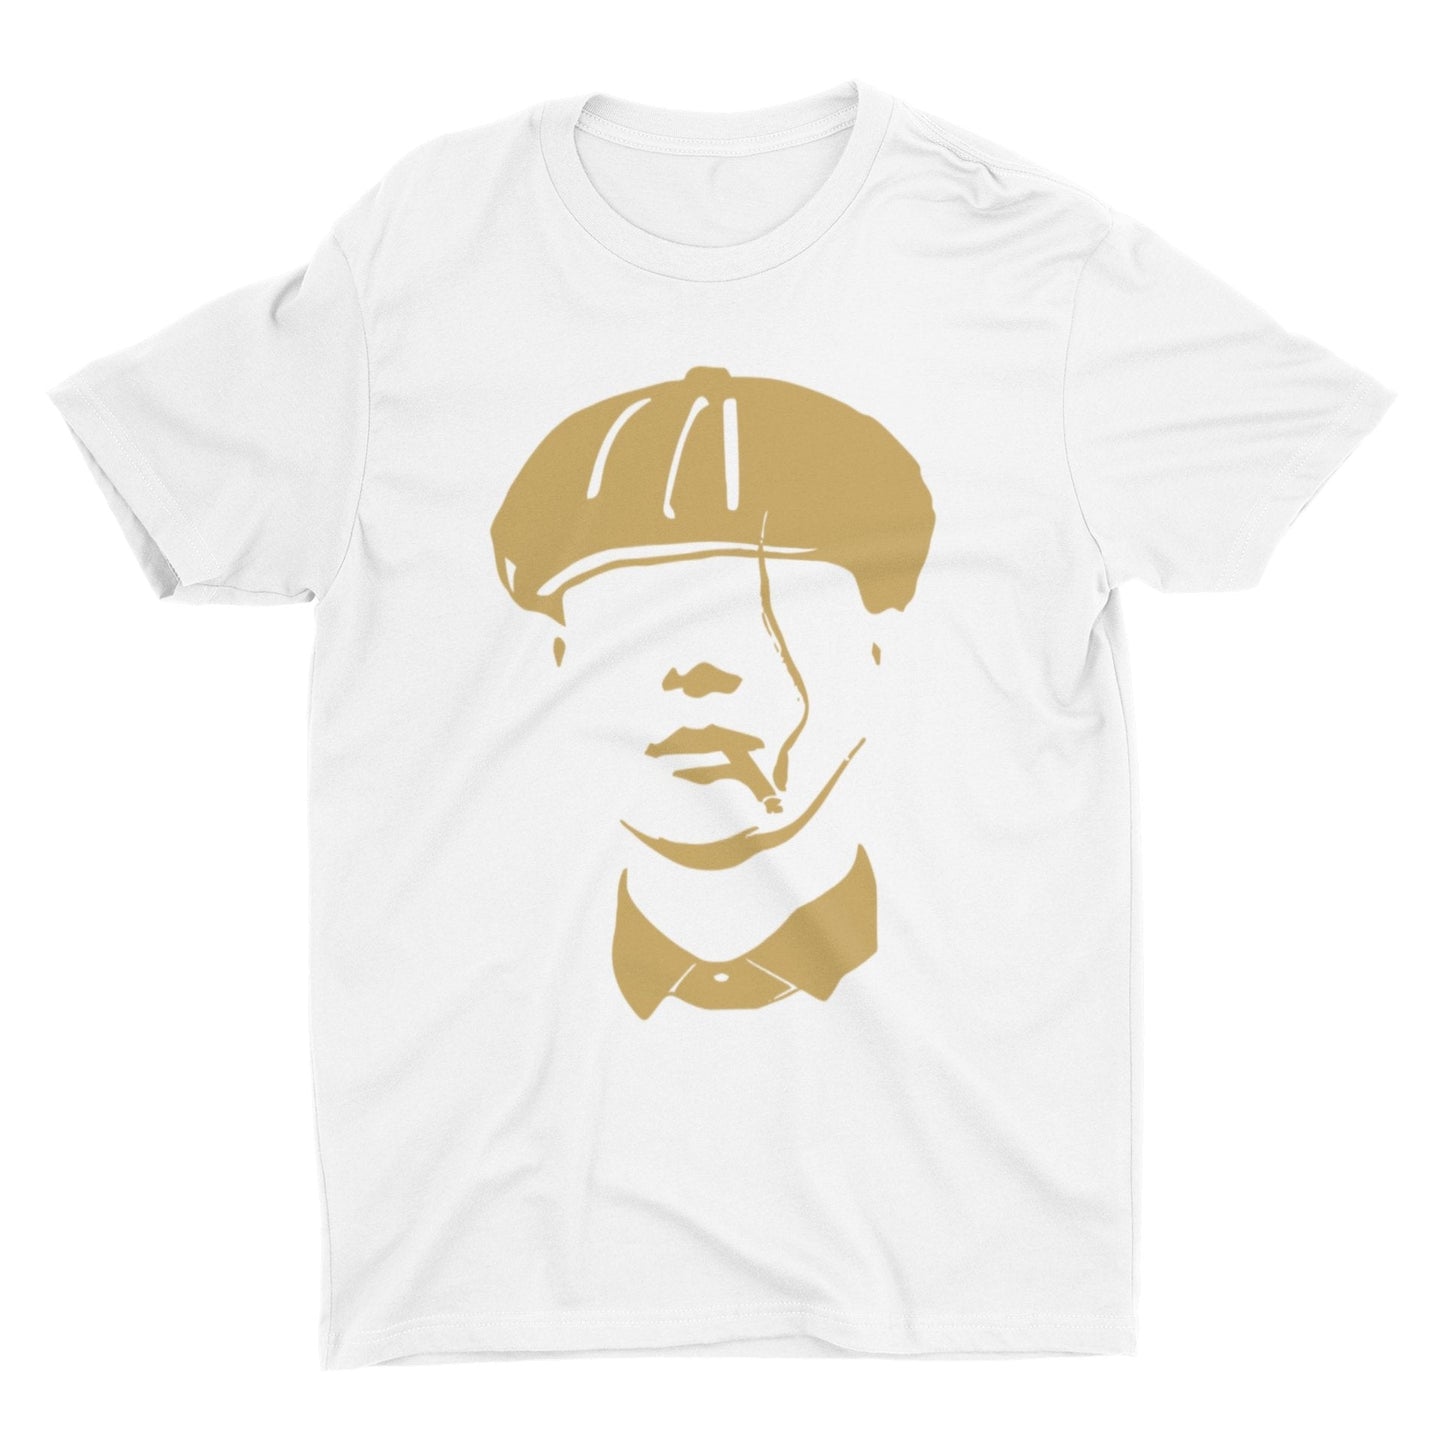 thelegalgang,Peaky Blinders Art T shirt for Men,.